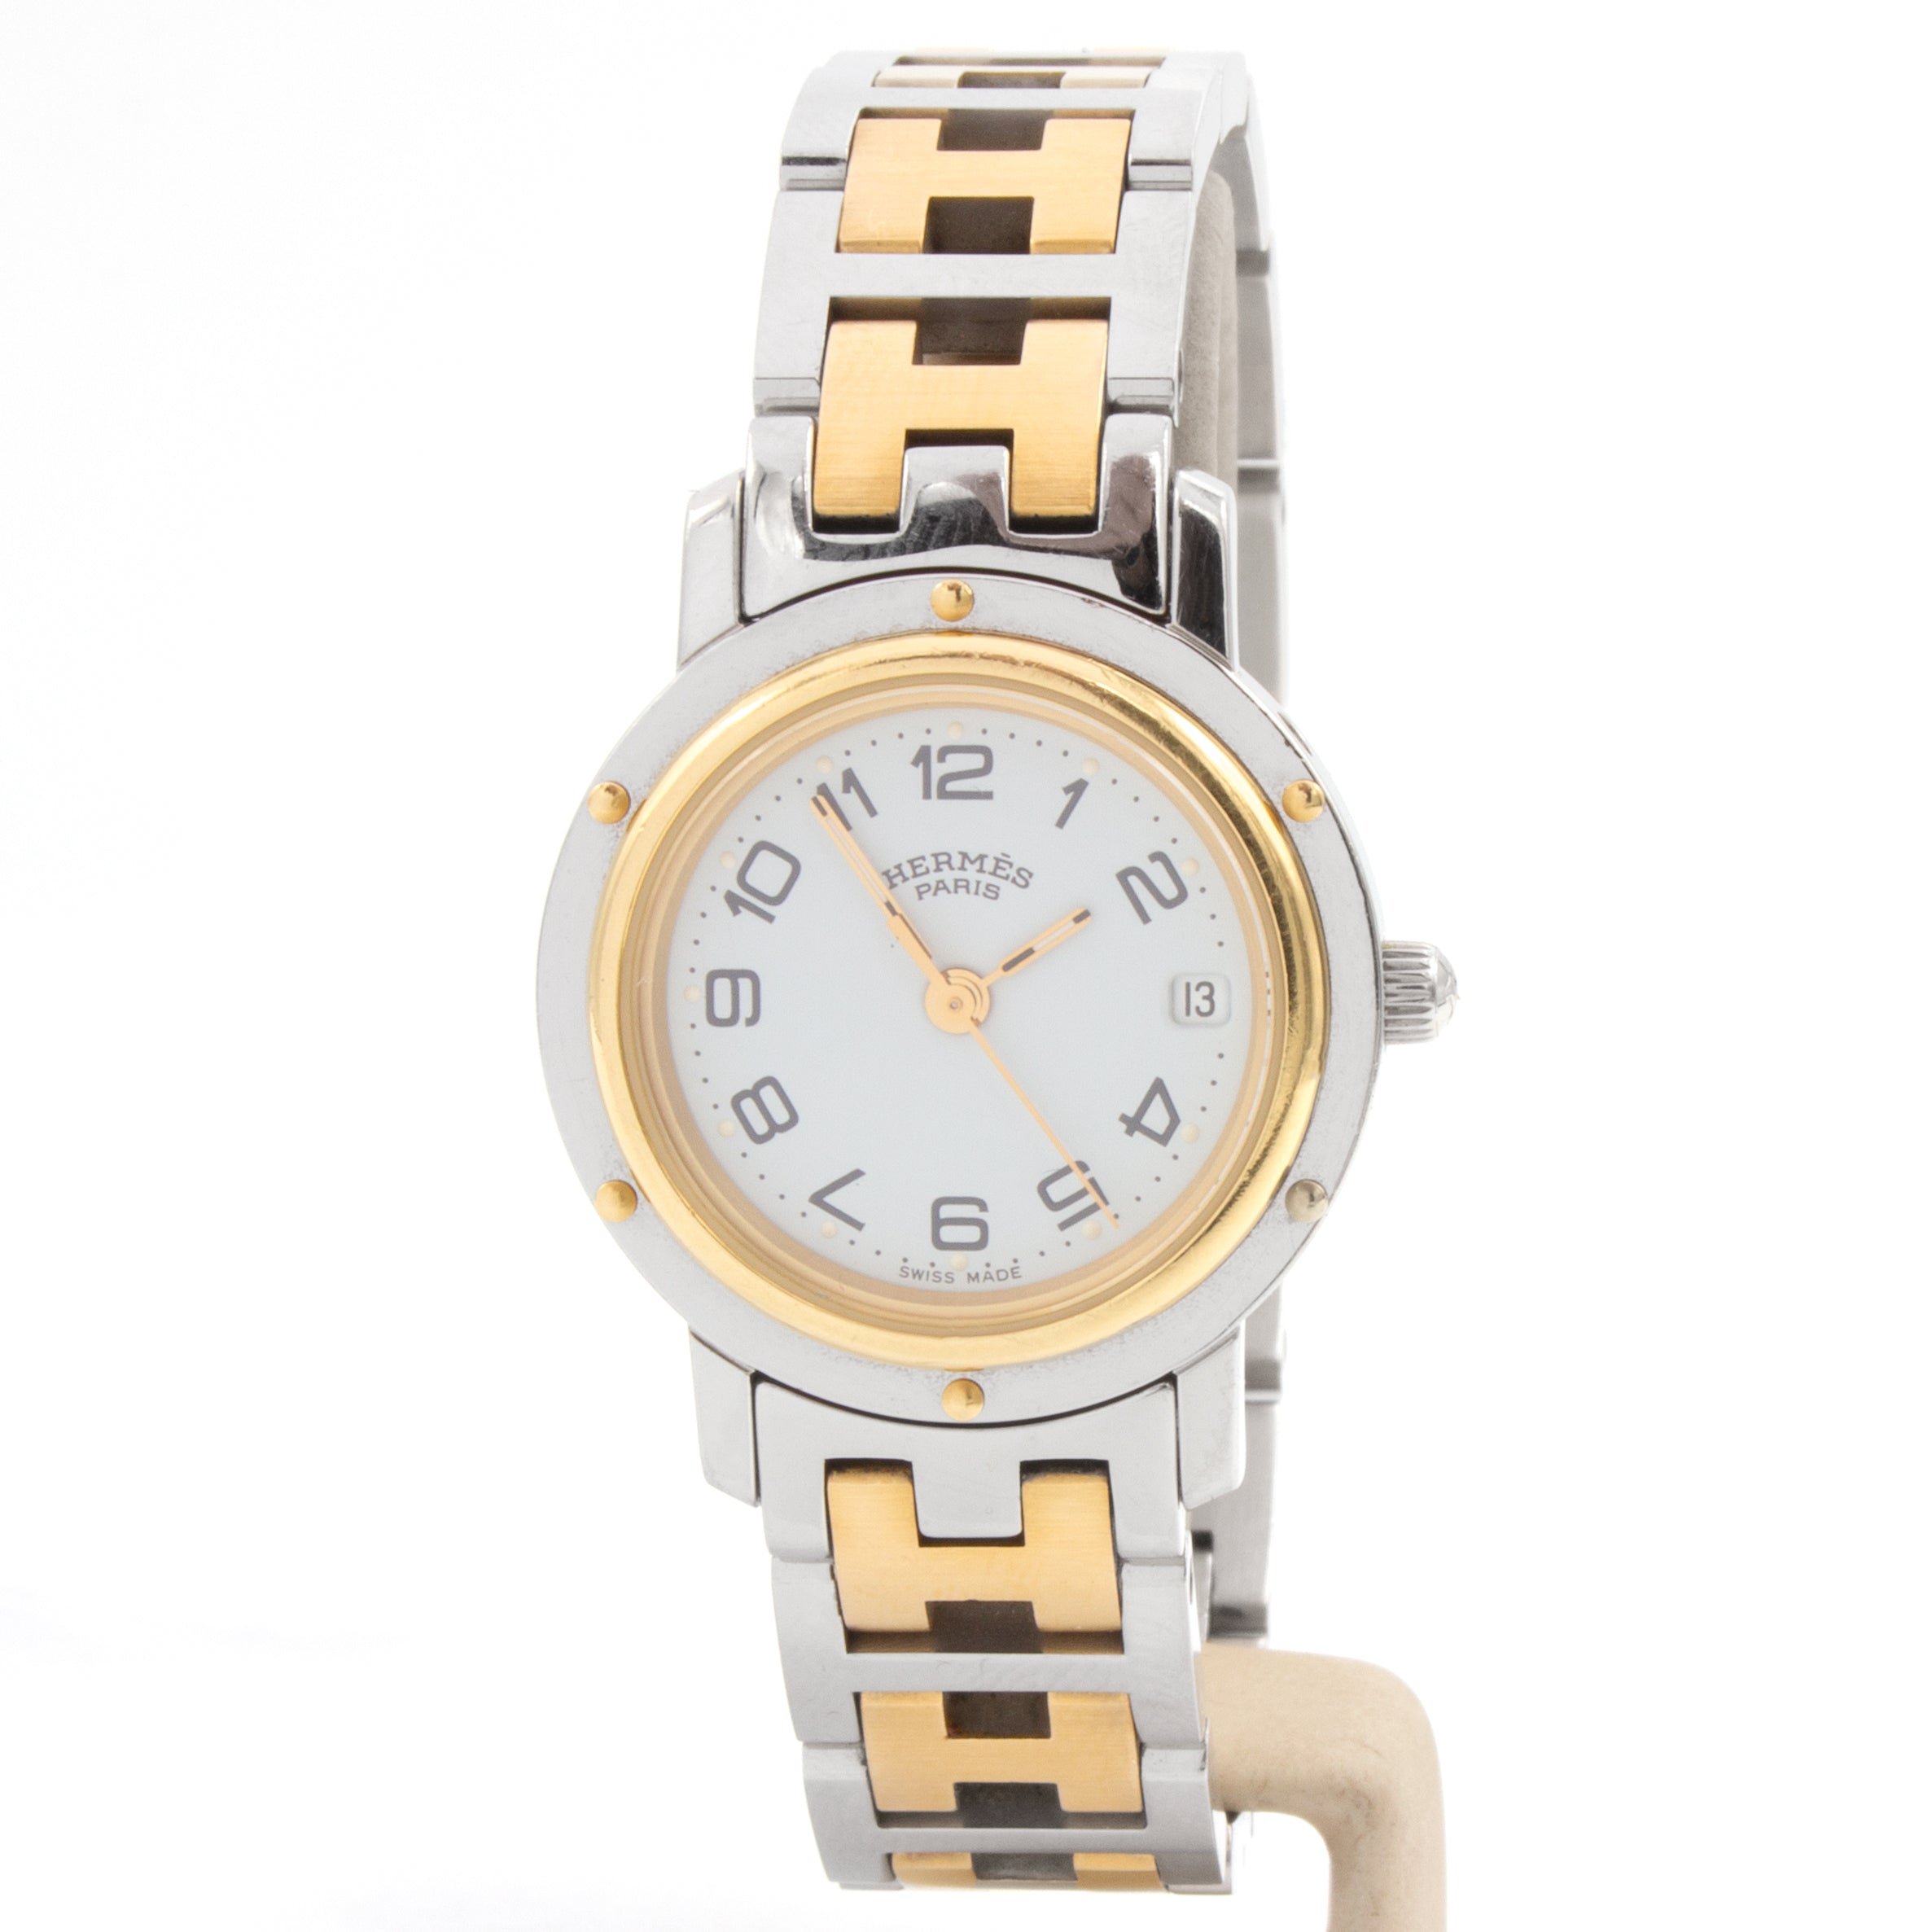 Hermes Clipper CL4.220 watch - Luxe \u0026 Em